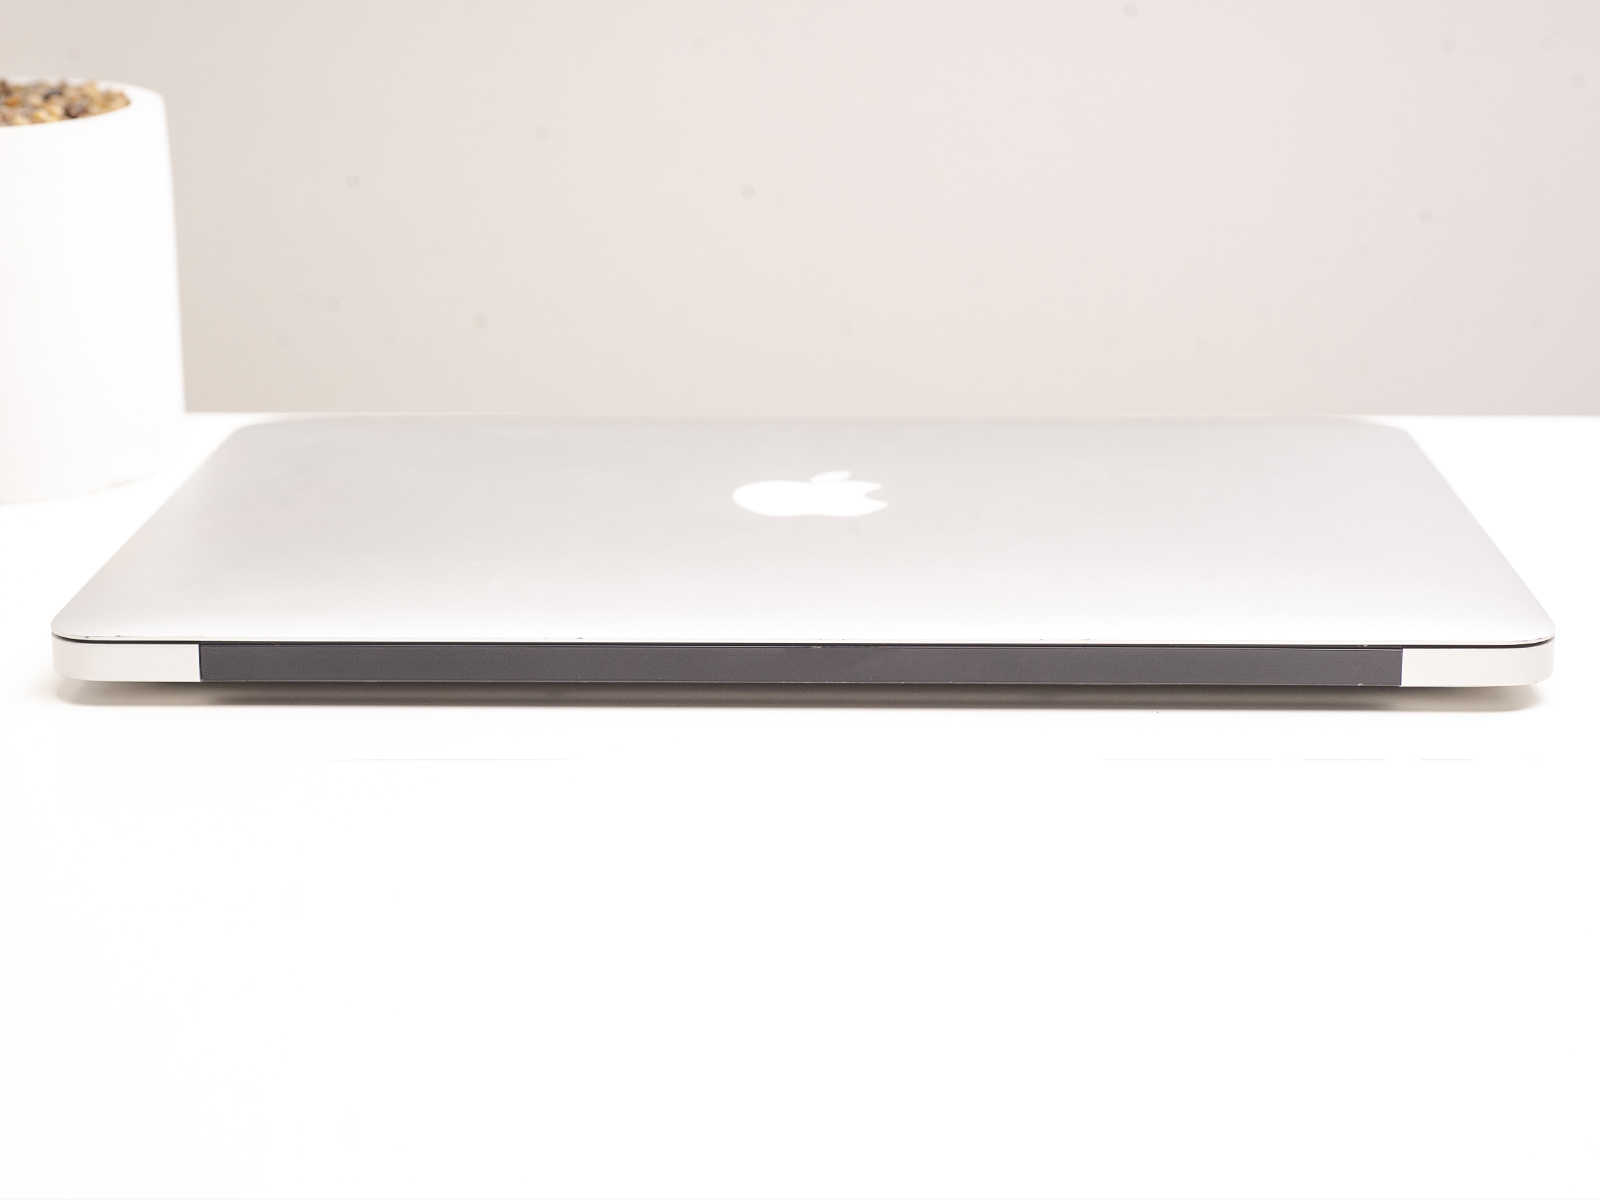 Apple MacBook Air 13 Silver 2016 (MMGG2) б/у